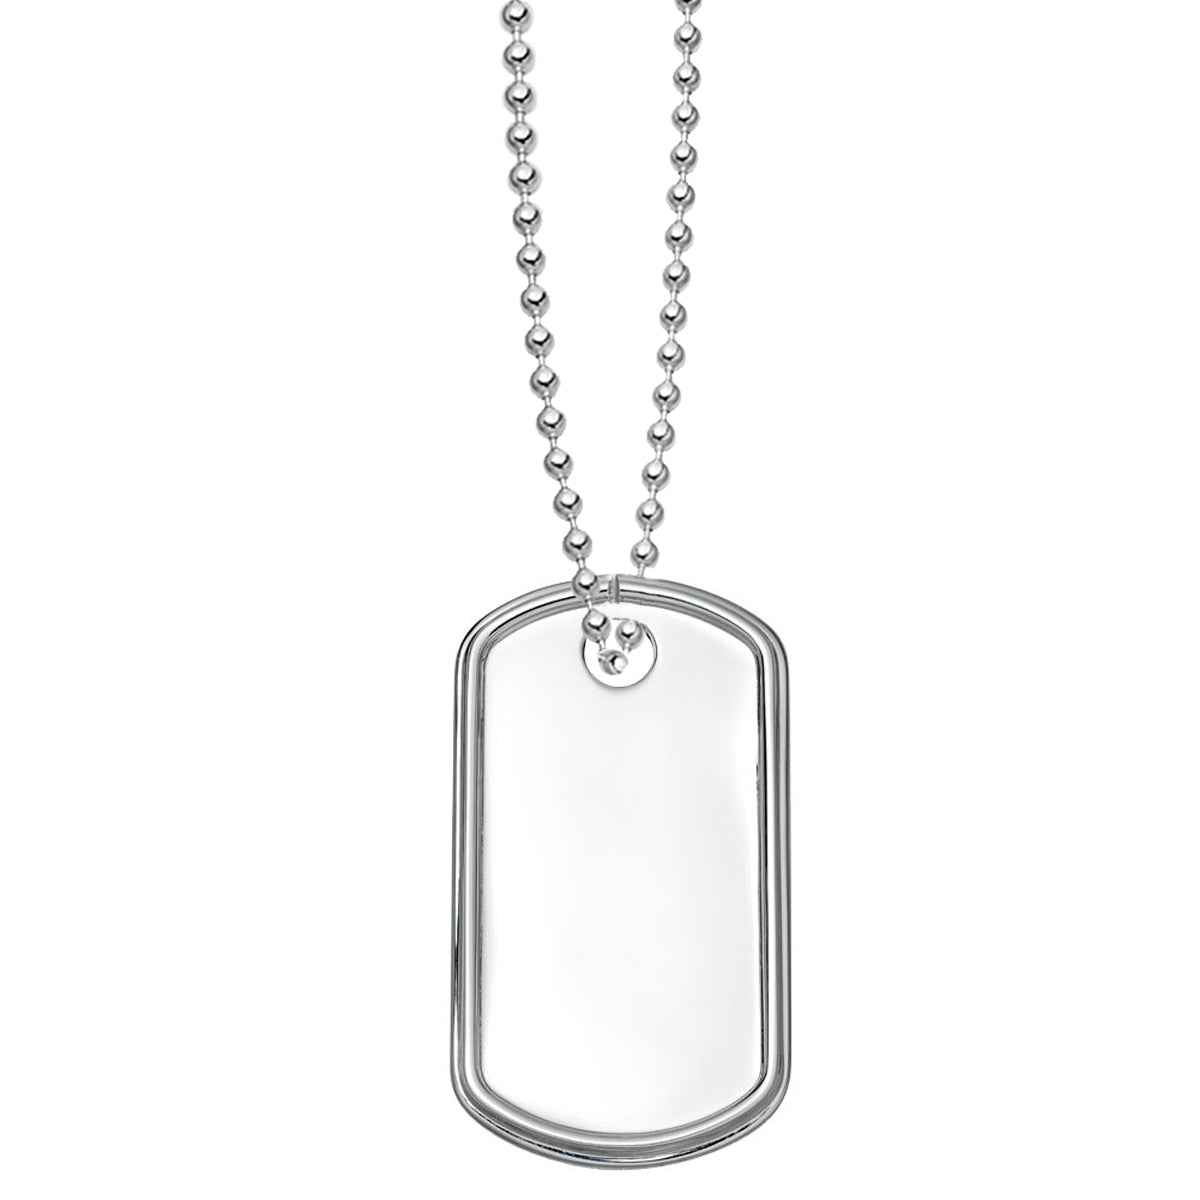 Silver dog tag pendant